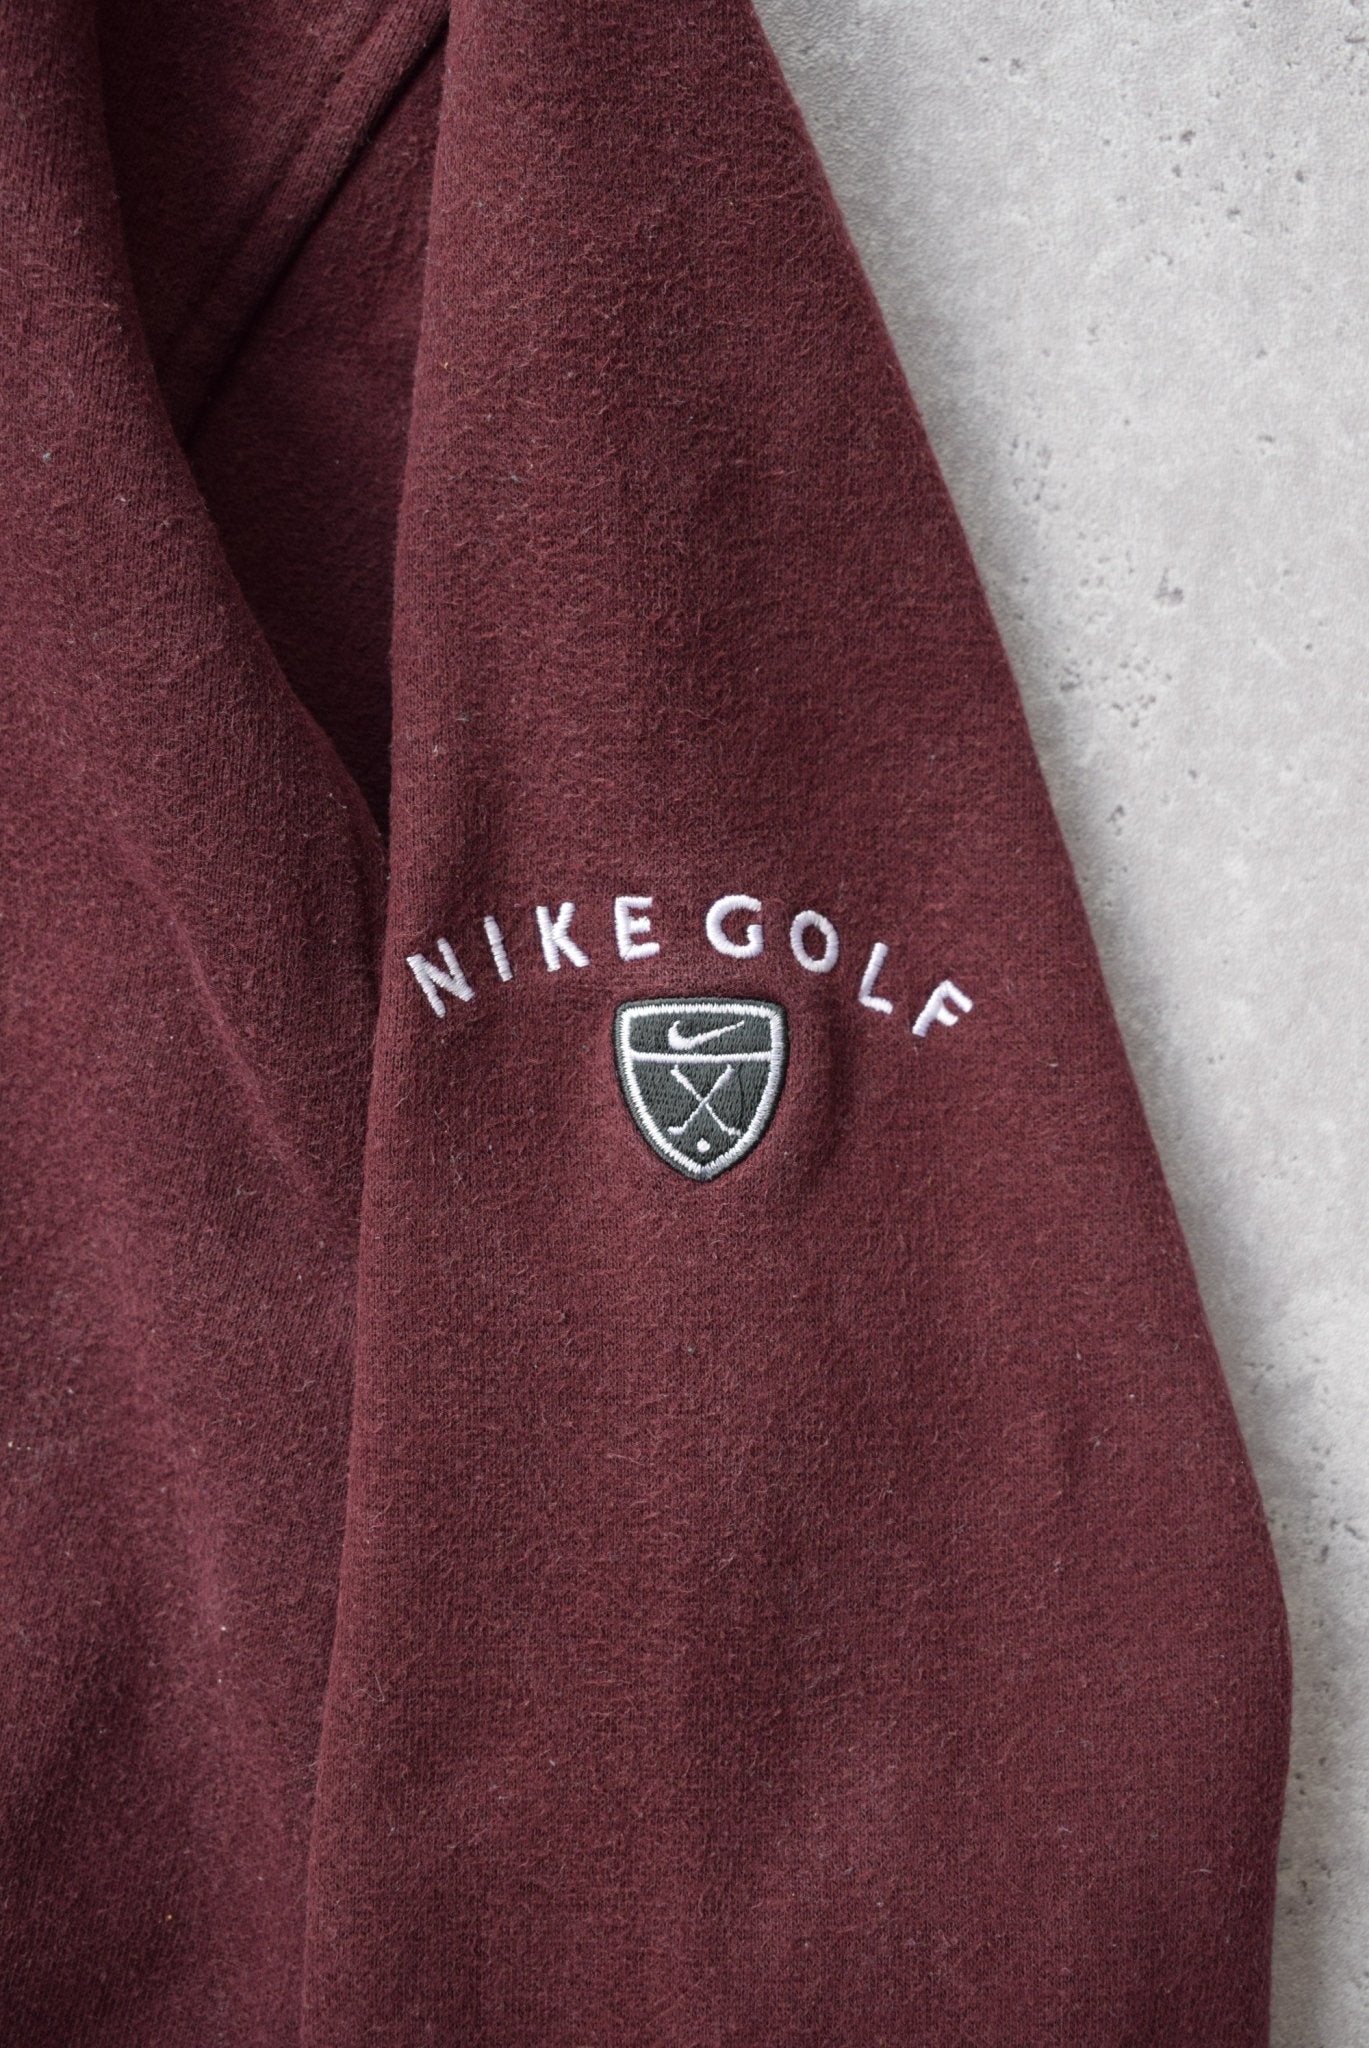 Vintage Nike Golf 1/4 Zip Sweater (M) - Retrospective Store